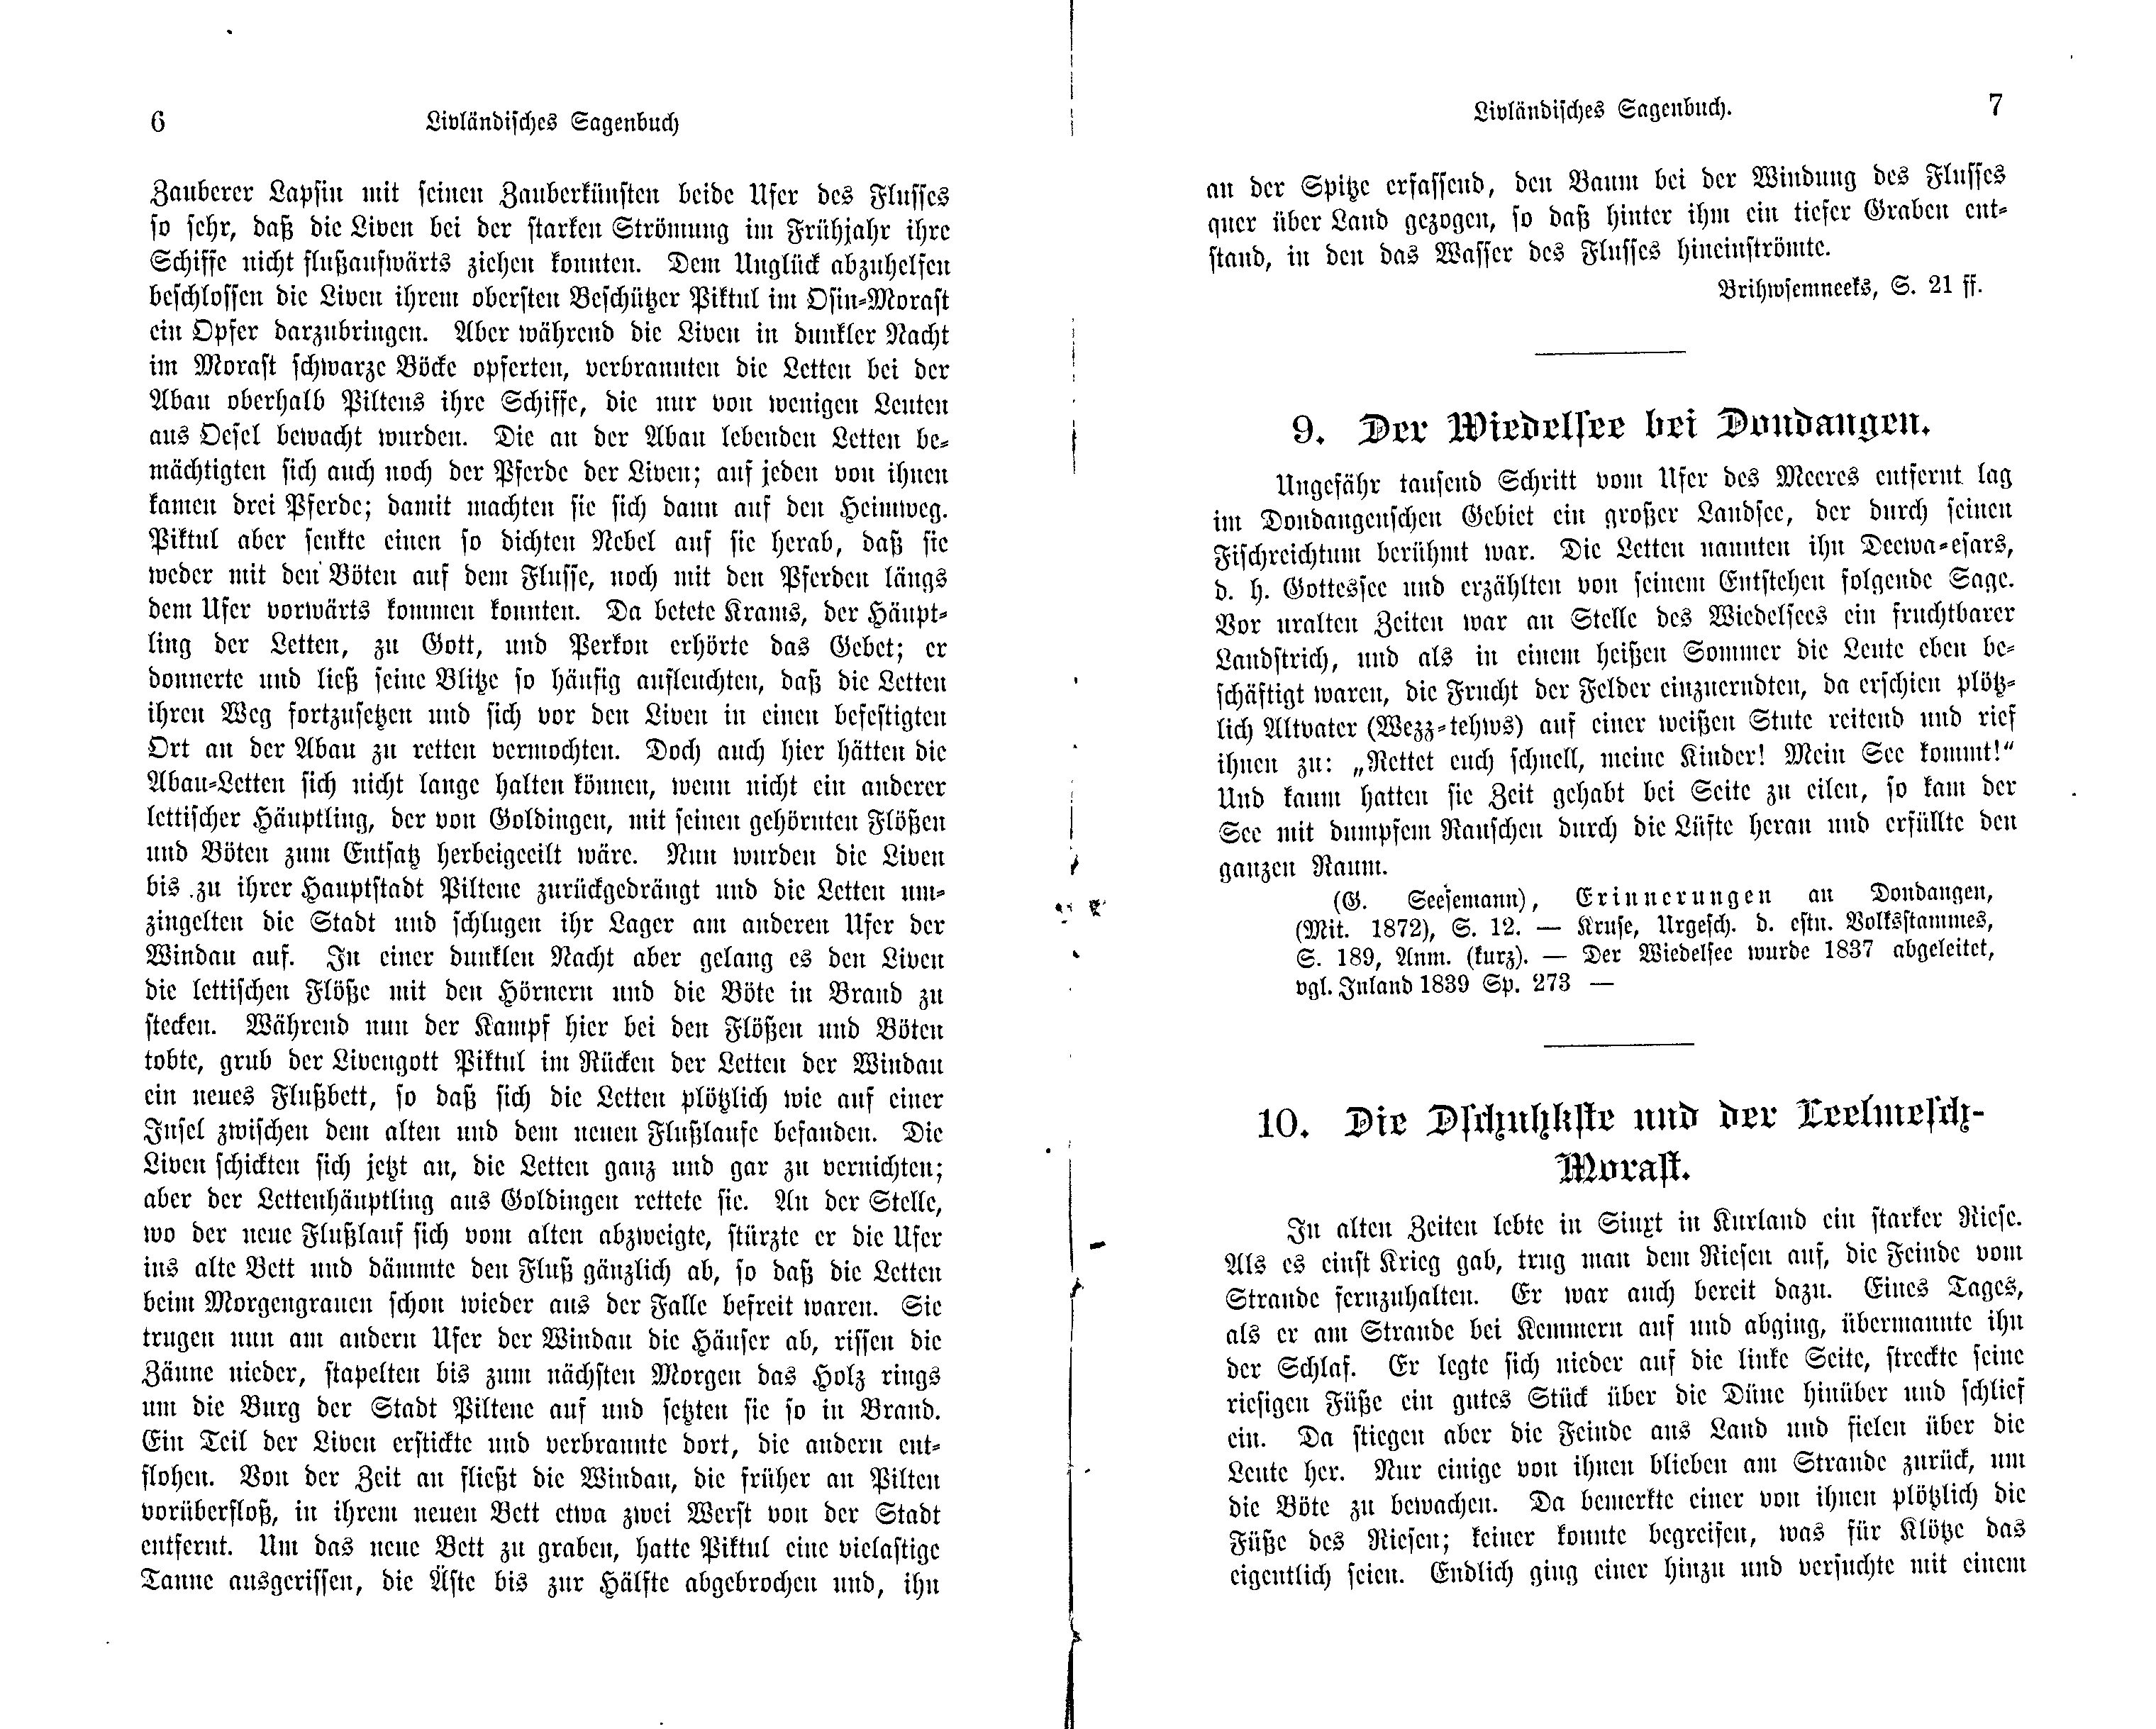 Livländisches Sagenbuch (1897) | 15. (6-7) Основной текст